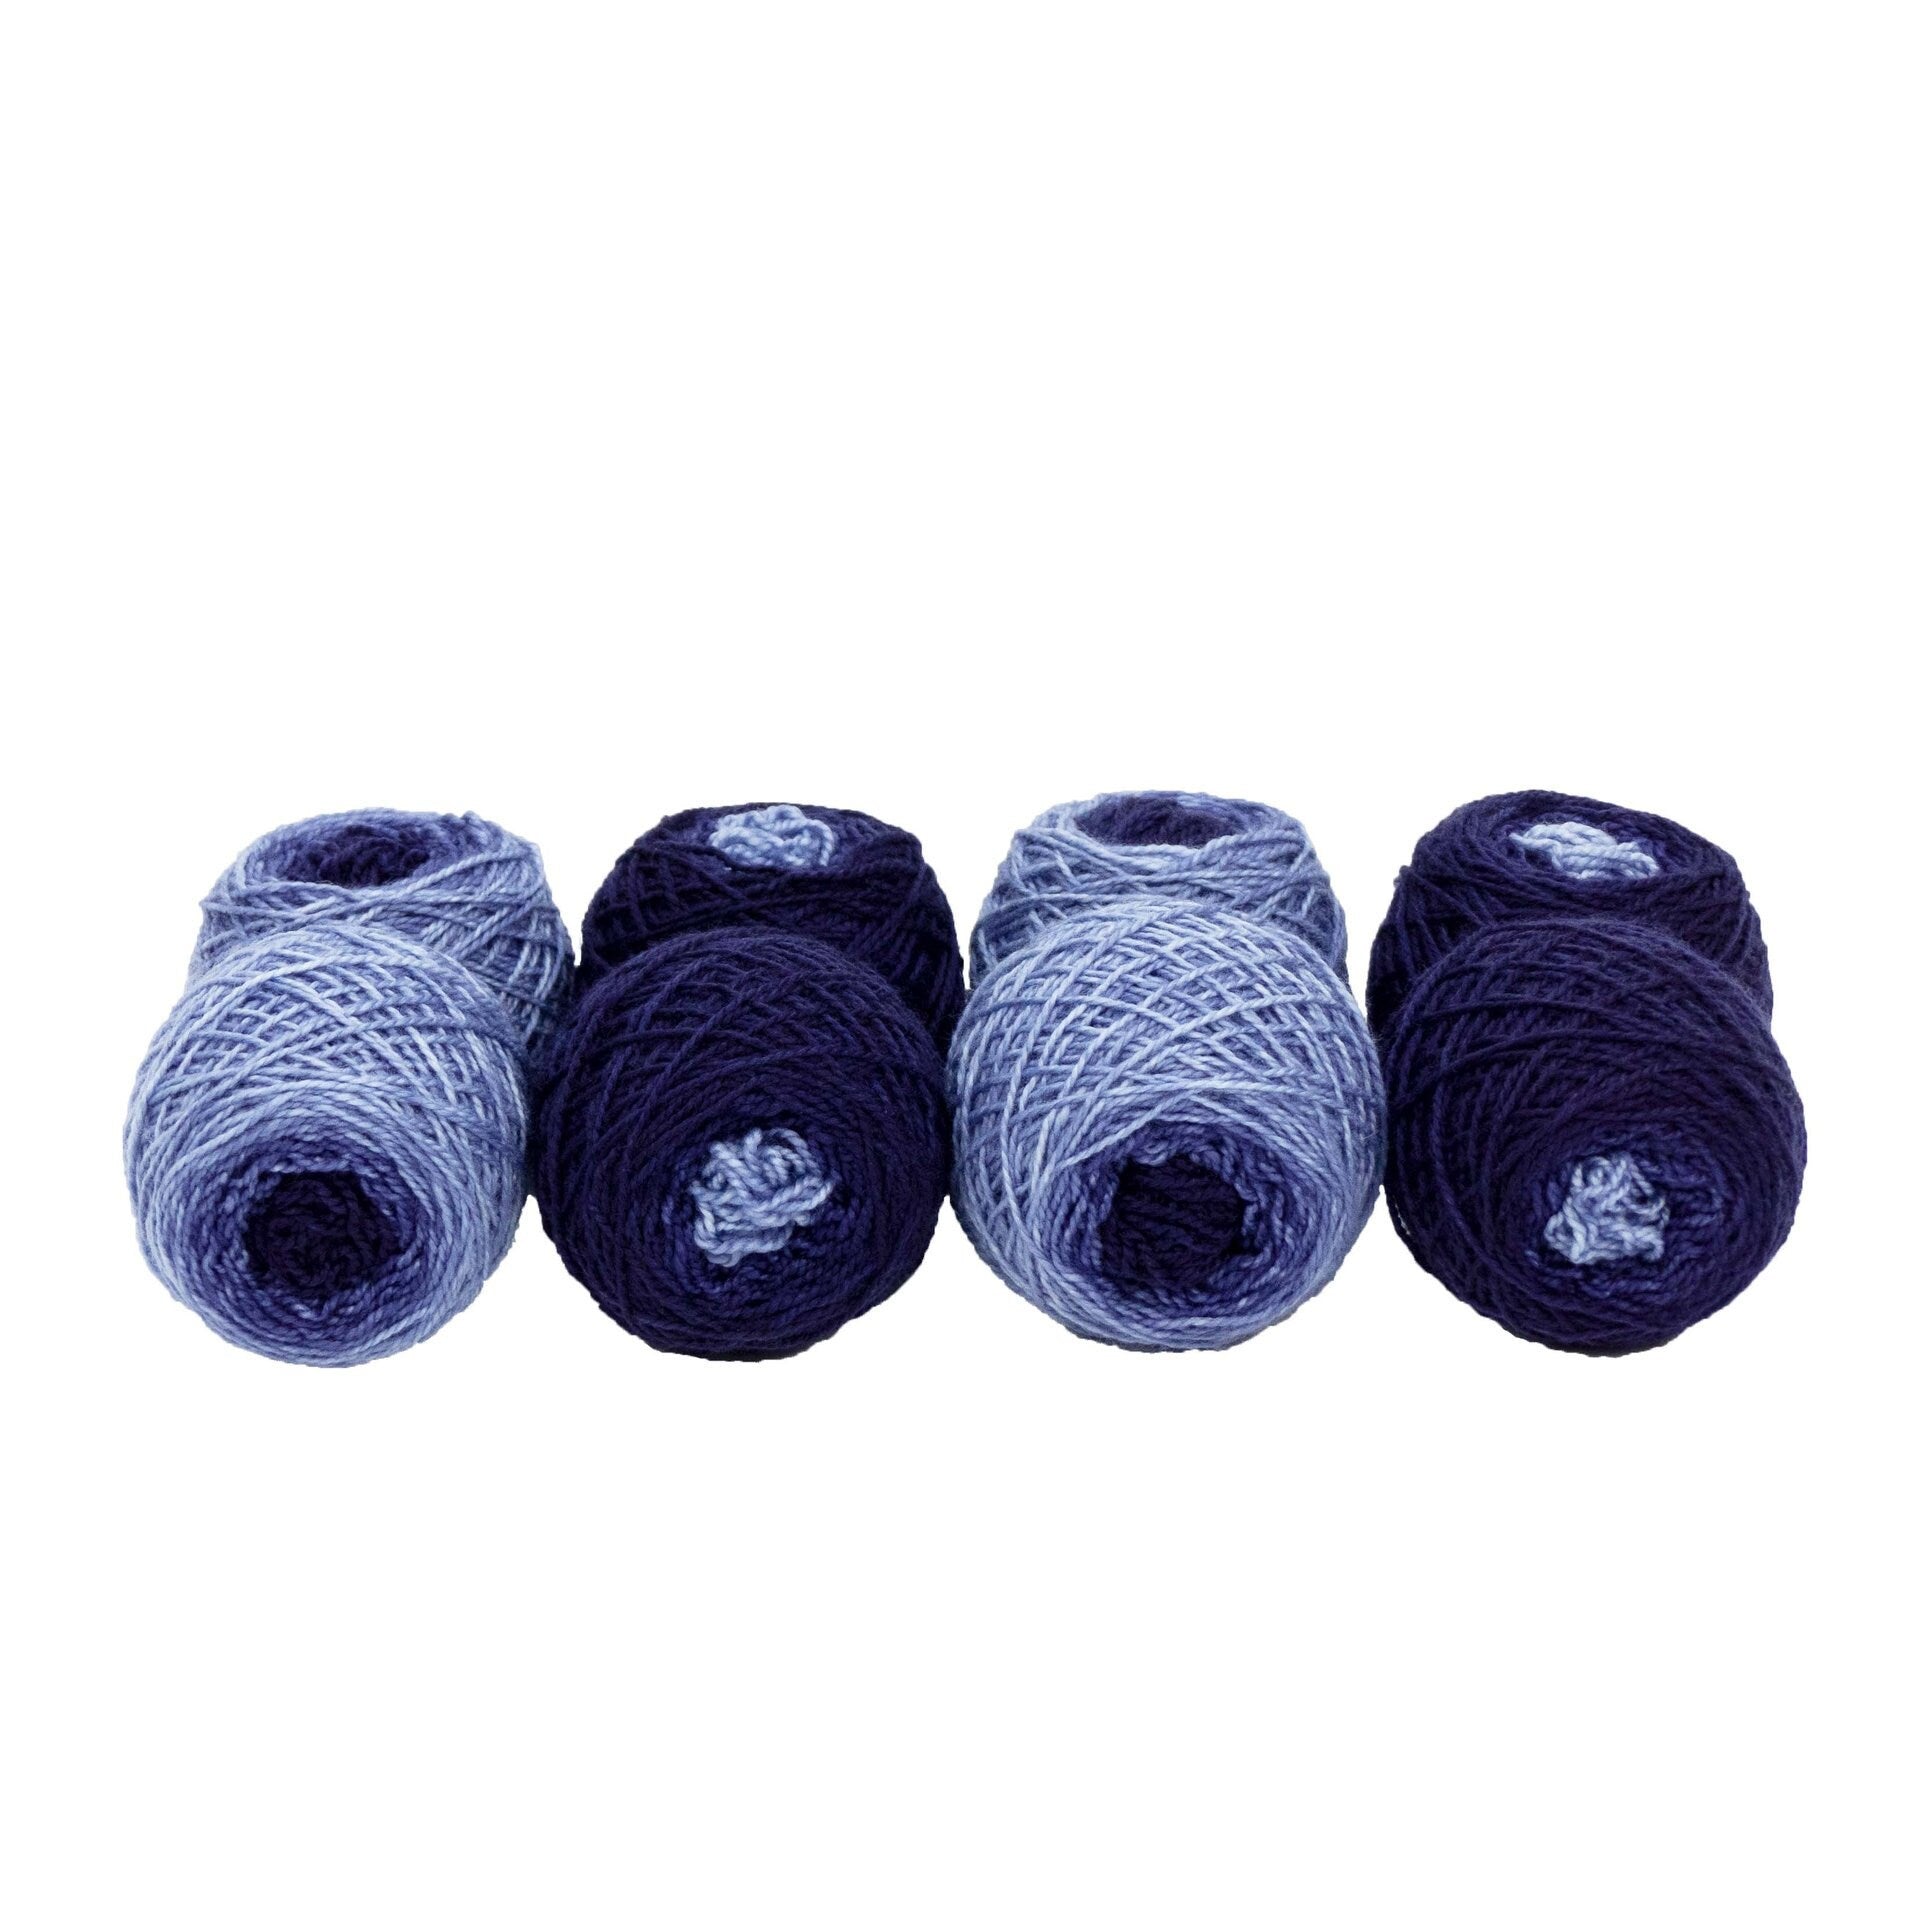 Shorty Sock Twins " Midnight Hour " - Lleap SW Merino/Nylon Handpainted Semisolid Gradient Sock Yarn Set